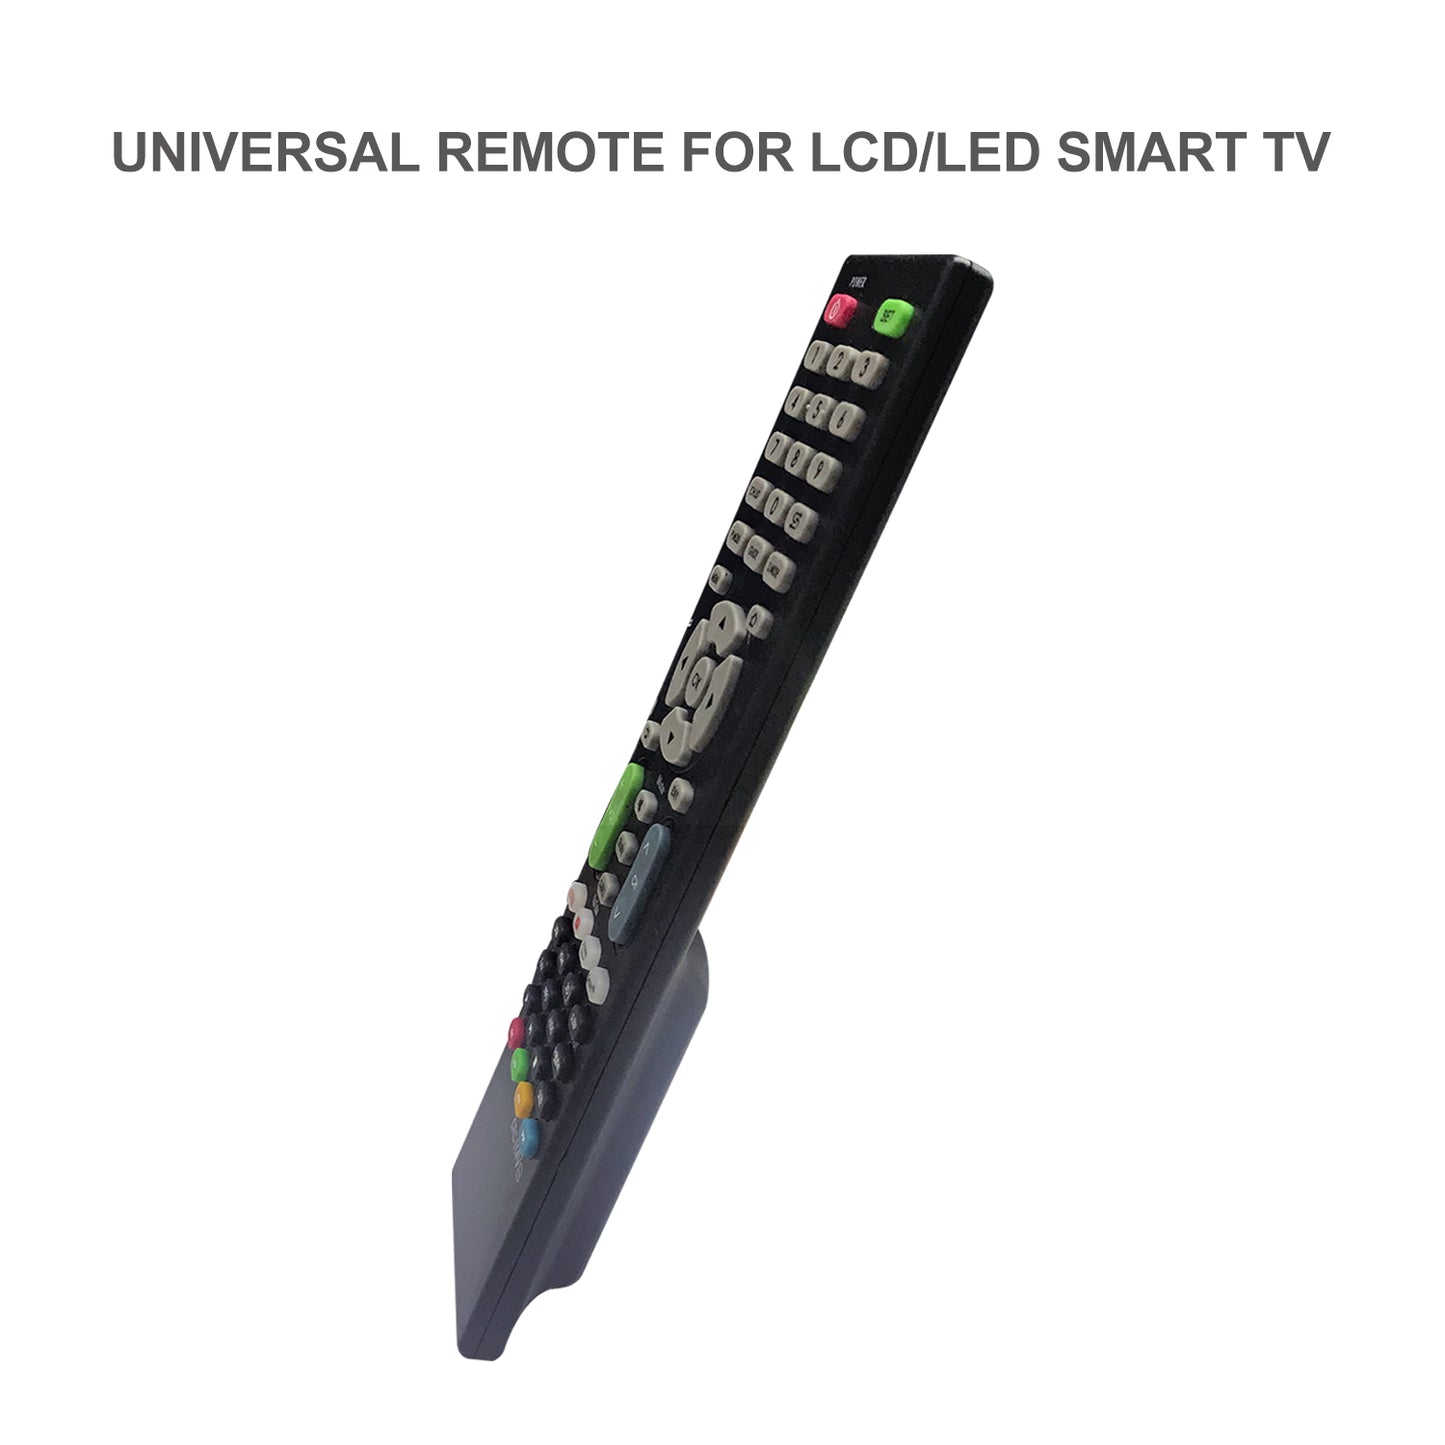 CRC014V Lite Universal TV Remote Control for LG, Samsung, Sony, Hisense, Panasonic, Philips, Sharp, Sanyo, Toshiba, Hitachi, TCL